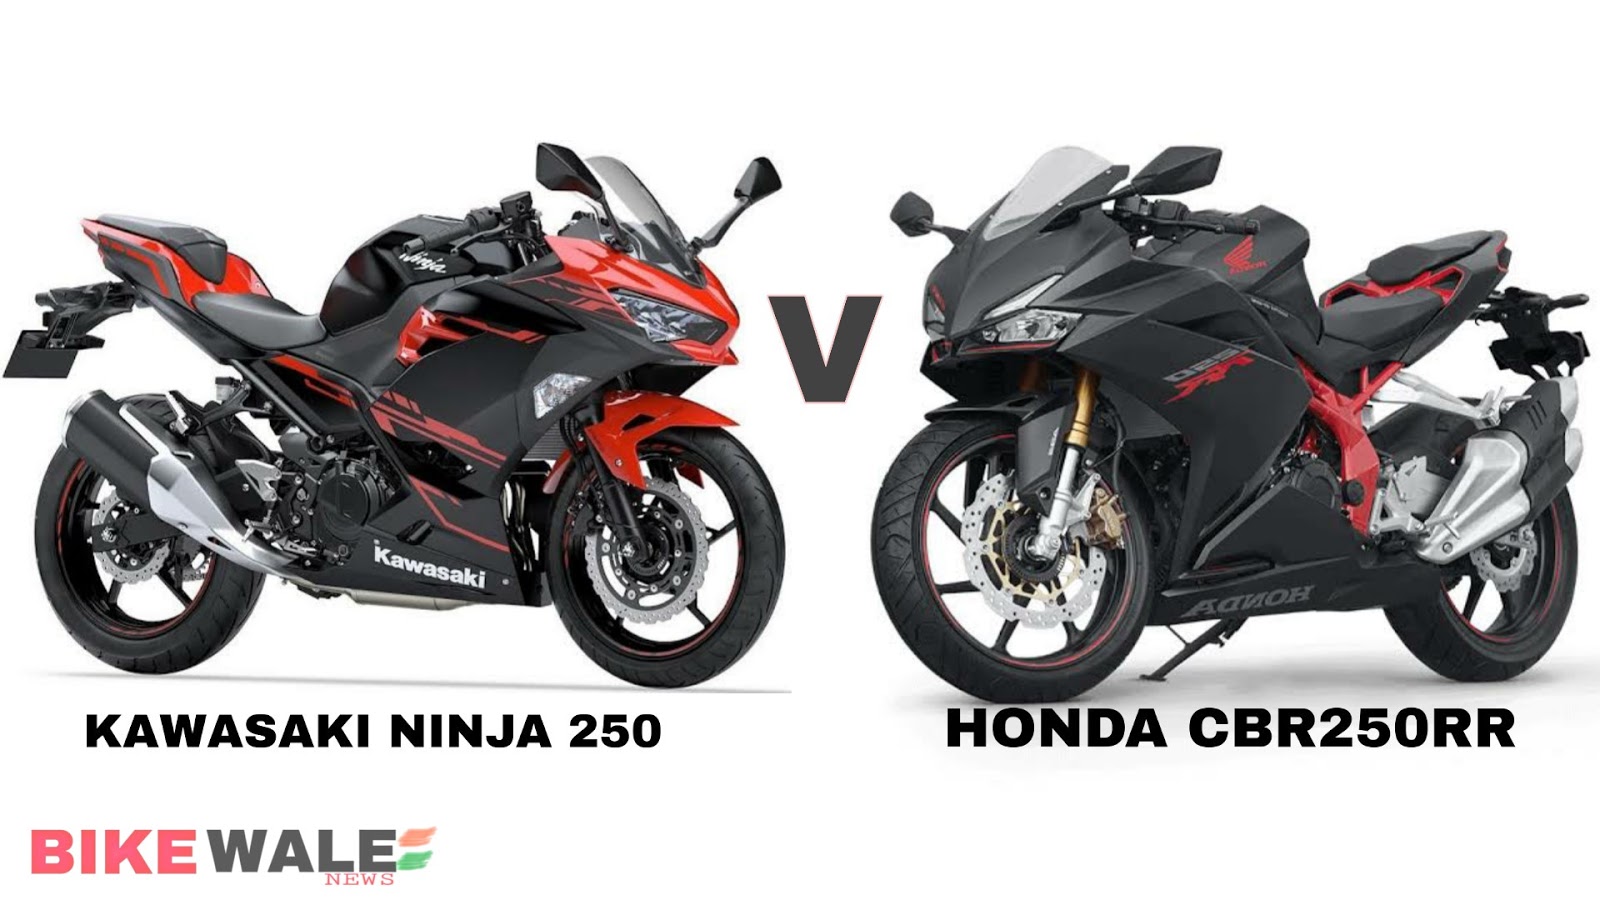 Honda Cbr250rr Vs Kawasaki Ninja 250 Compare